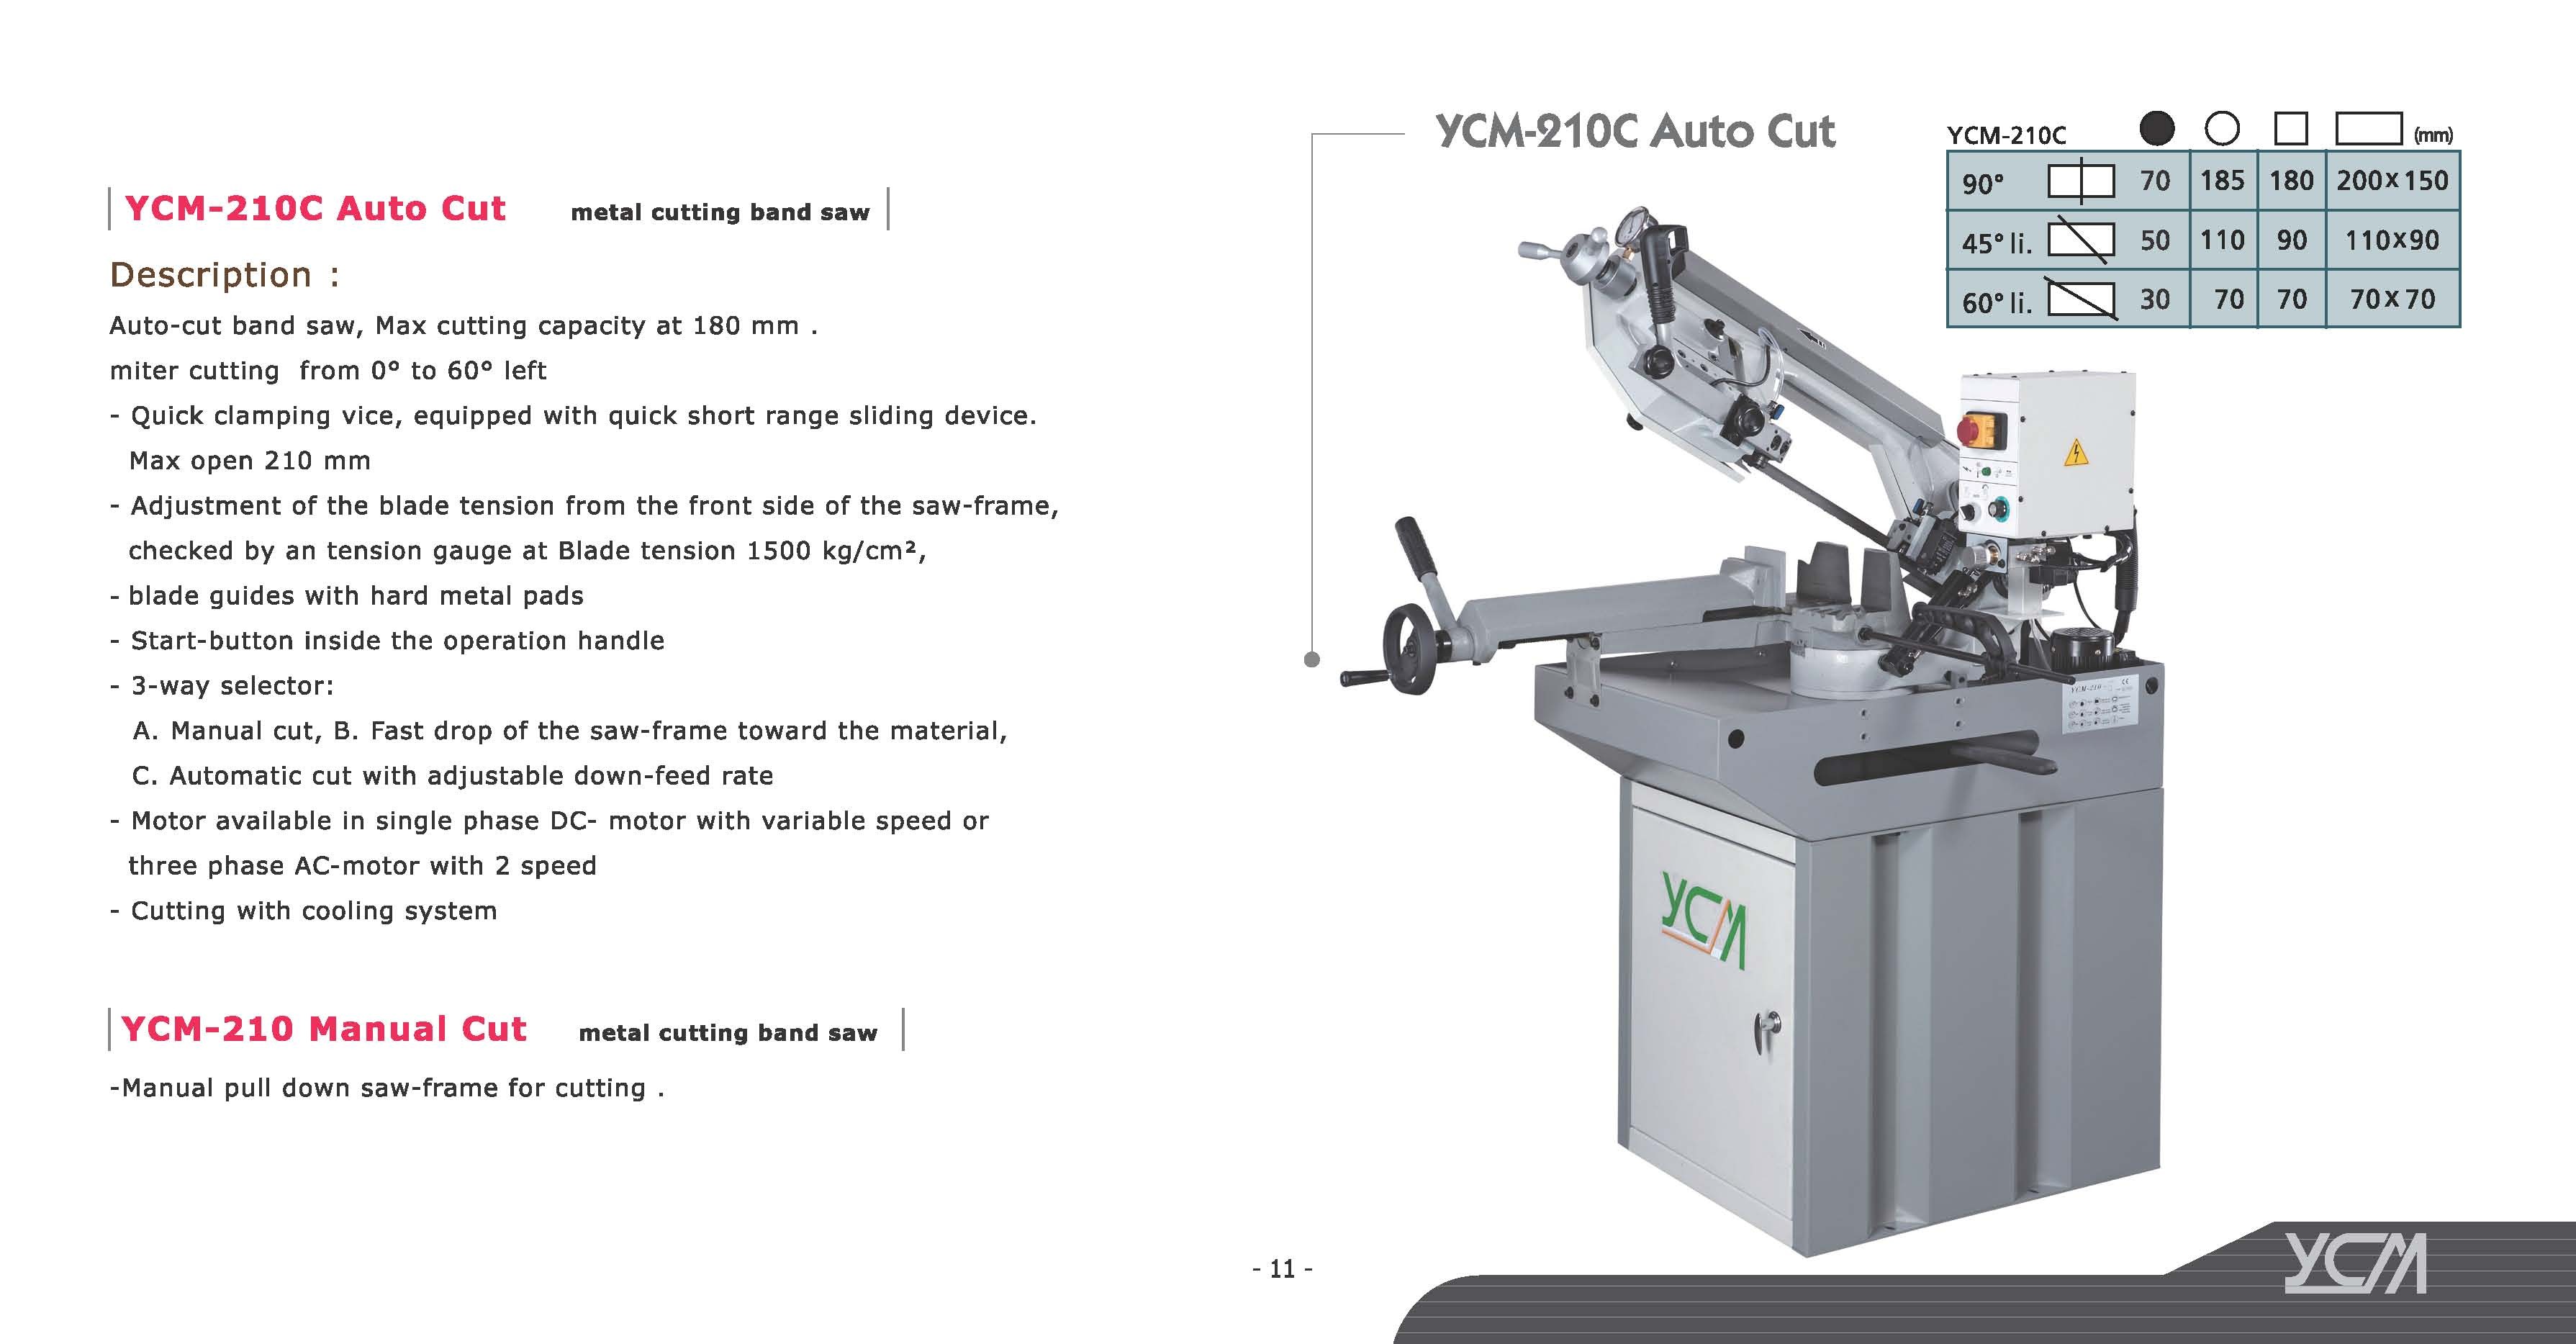 YCM-210C-Auto-Cut-34-8-trieu-(1).jpg